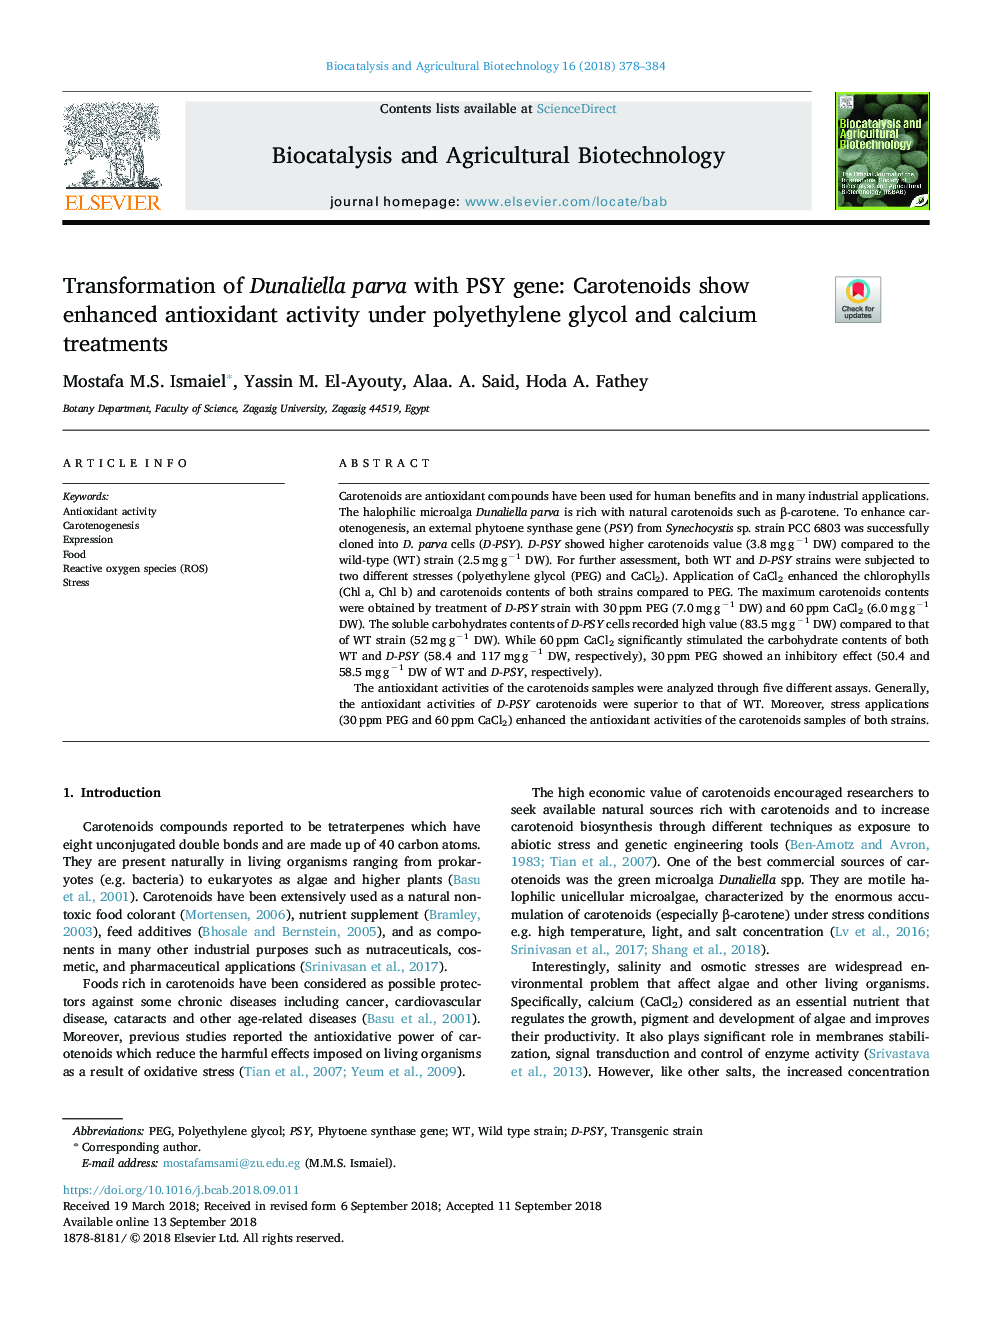 Transformation of Dunaliella parva with PSY gene: Carotenoids show enhanced antioxidant activity under polyethylene glycol and calcium treatments